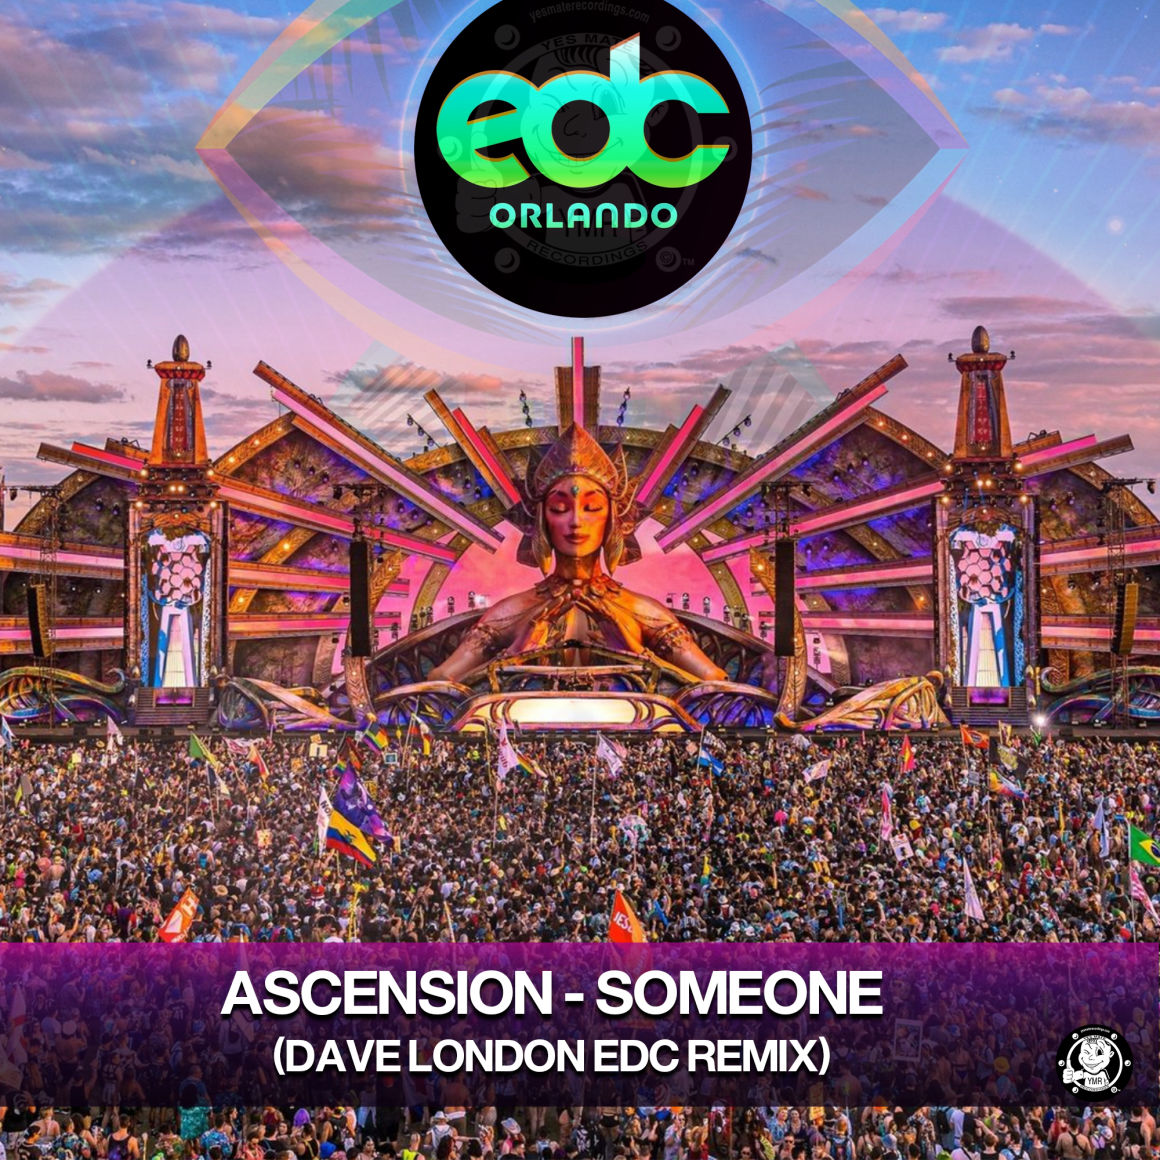 Ascension - Someone (Dave London EDC Remix)